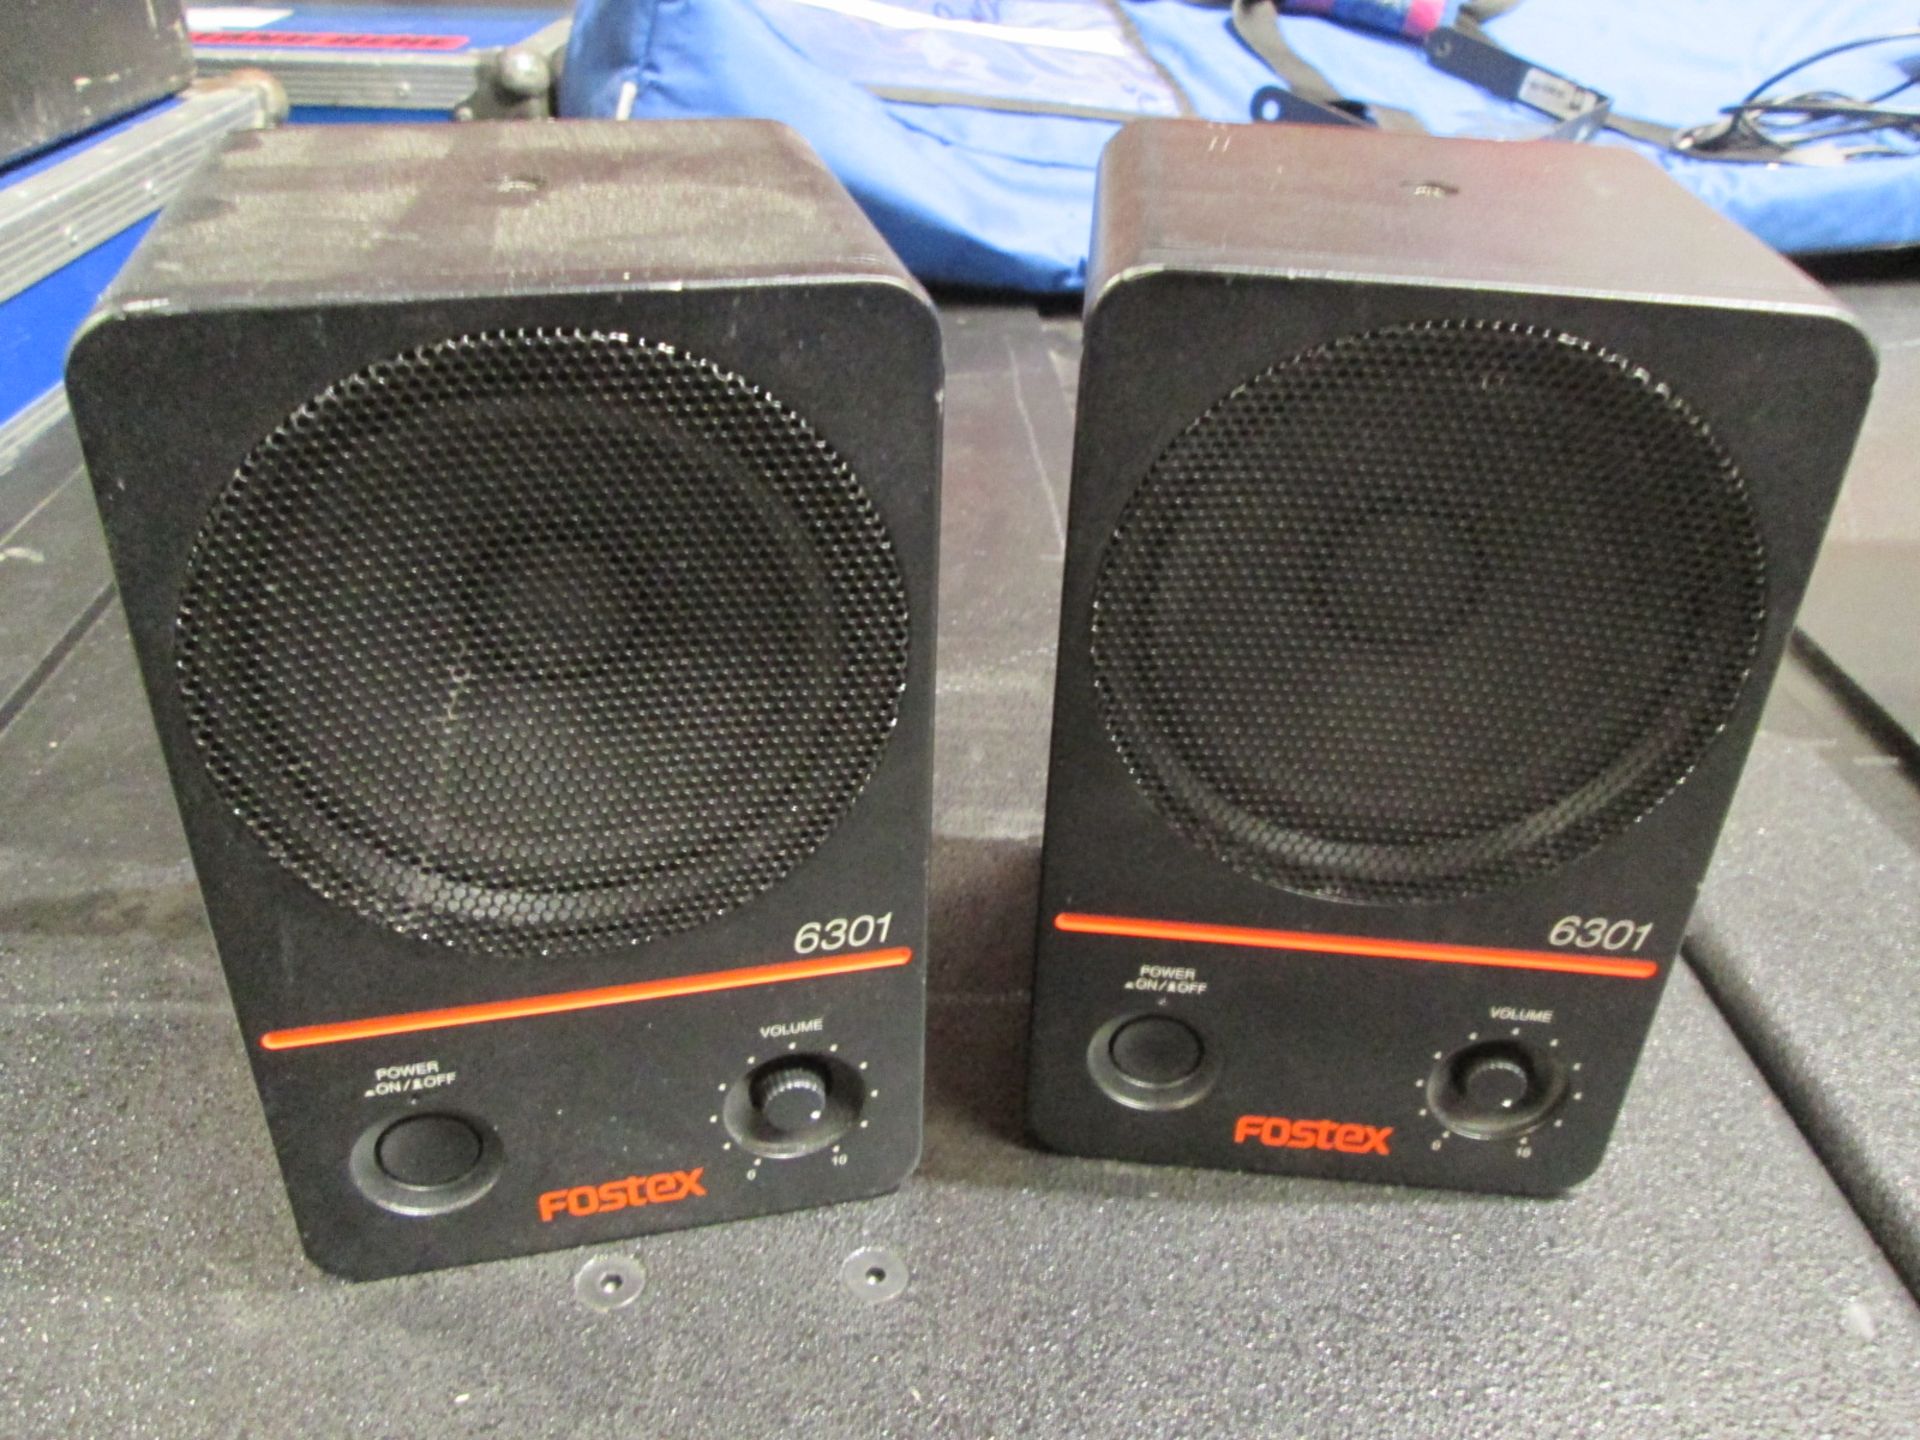 Fostex 6301NX Self Powered Speakers, In flight case - Image 2 of 4